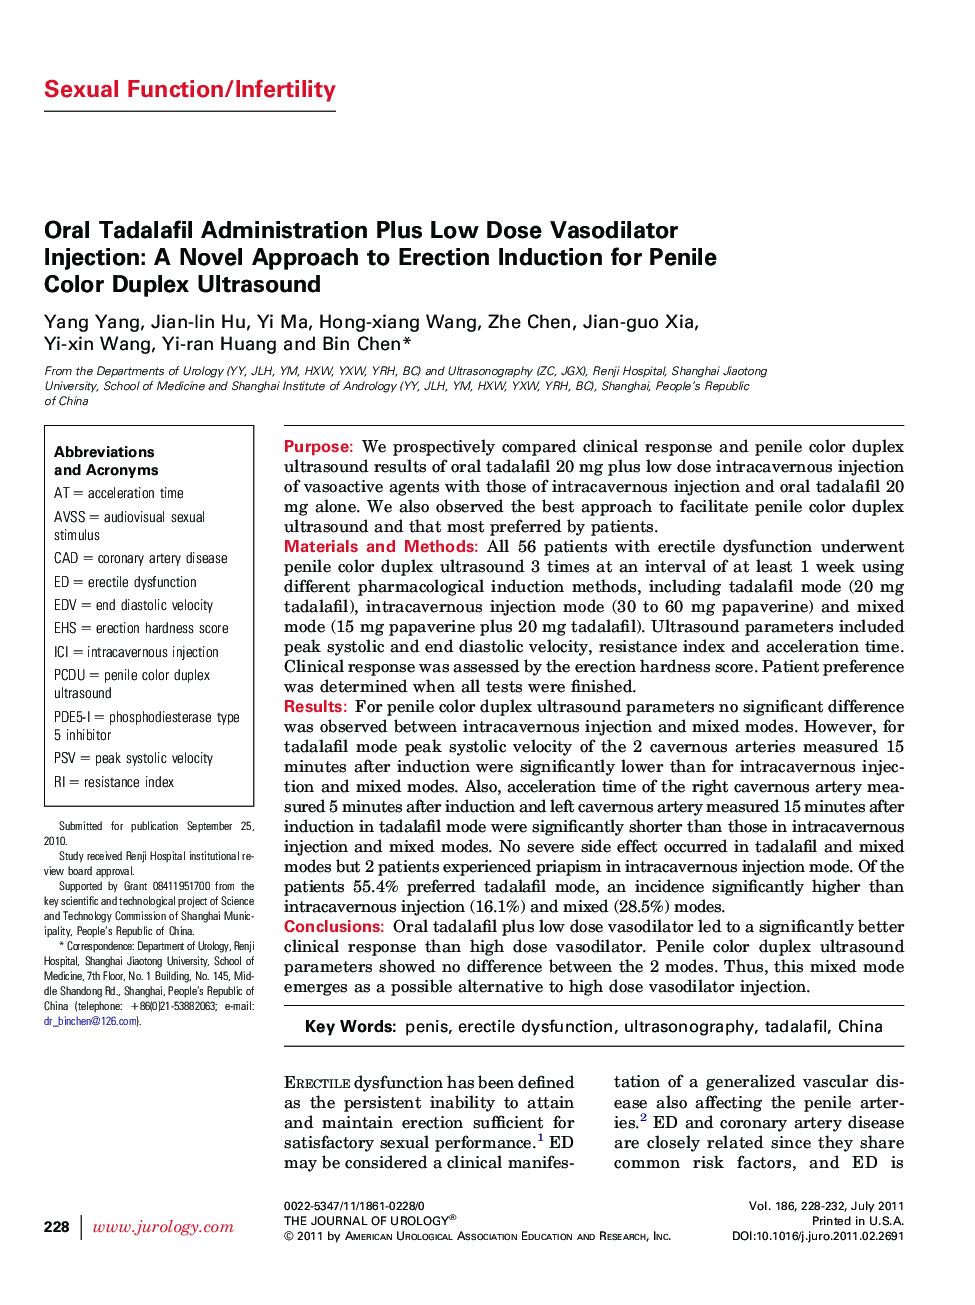 Oral Tadalafil Administration Plus Low Dose Vasodilator Injection: A Novel Approach to Erection Induction for Penile Color Duplex Ultrasound